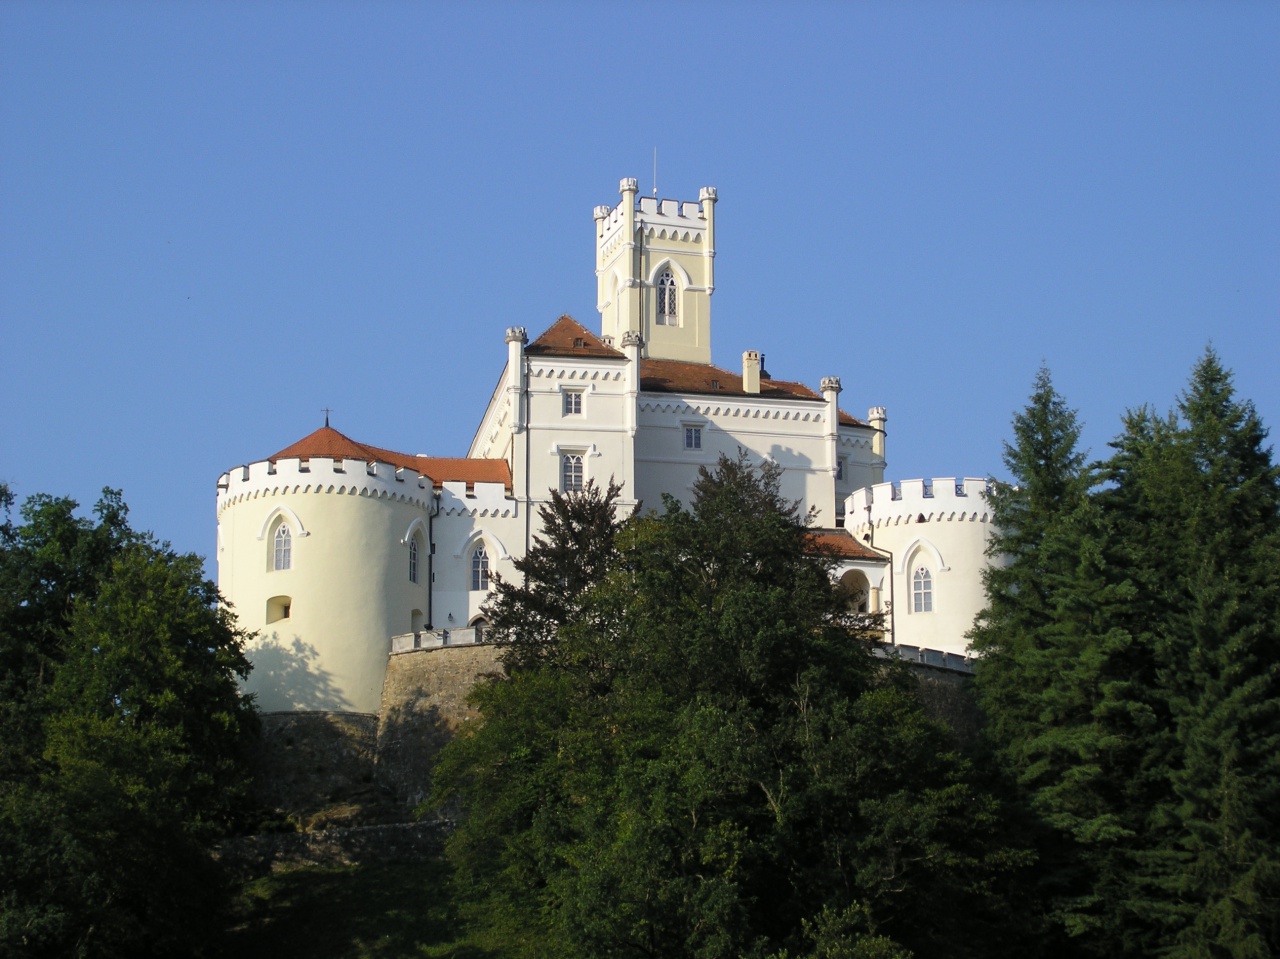 Trakošćan Castle High Quality Background on Wallpapers Vista